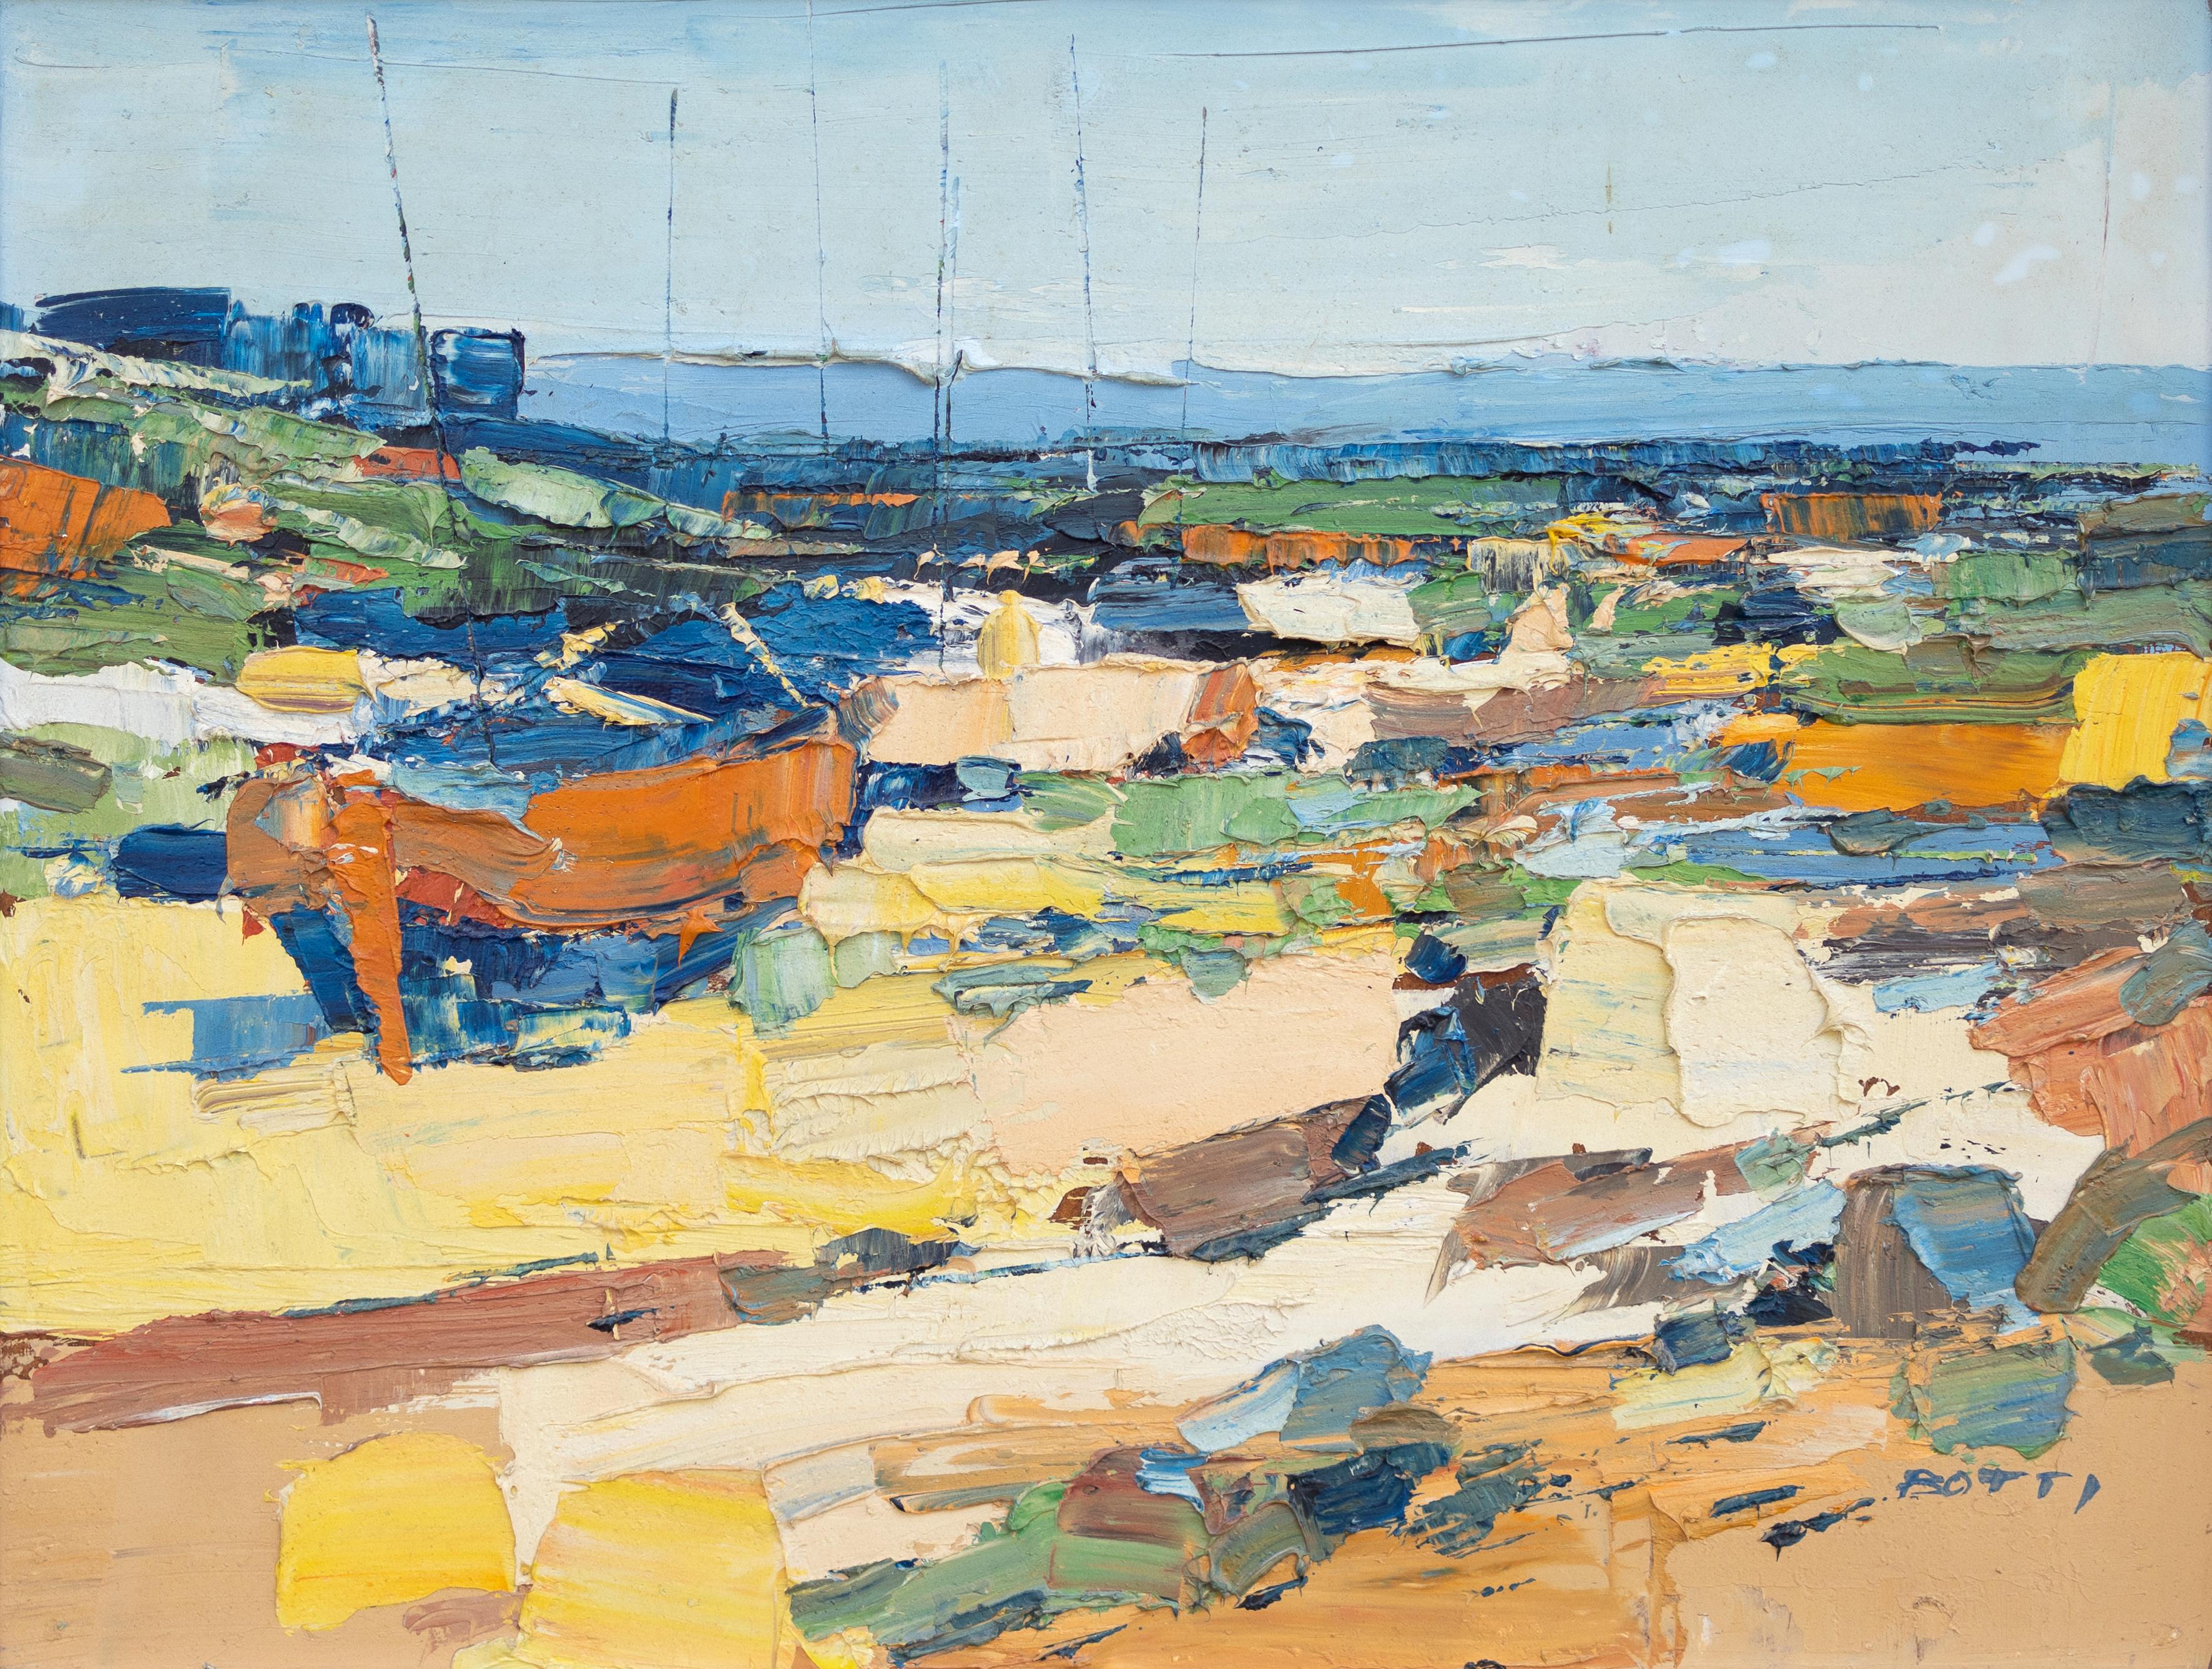 Italo Botti Landscape Painting - "Seascape" Mid Century Modern Impasto Paining of Boats Beach and Ocean